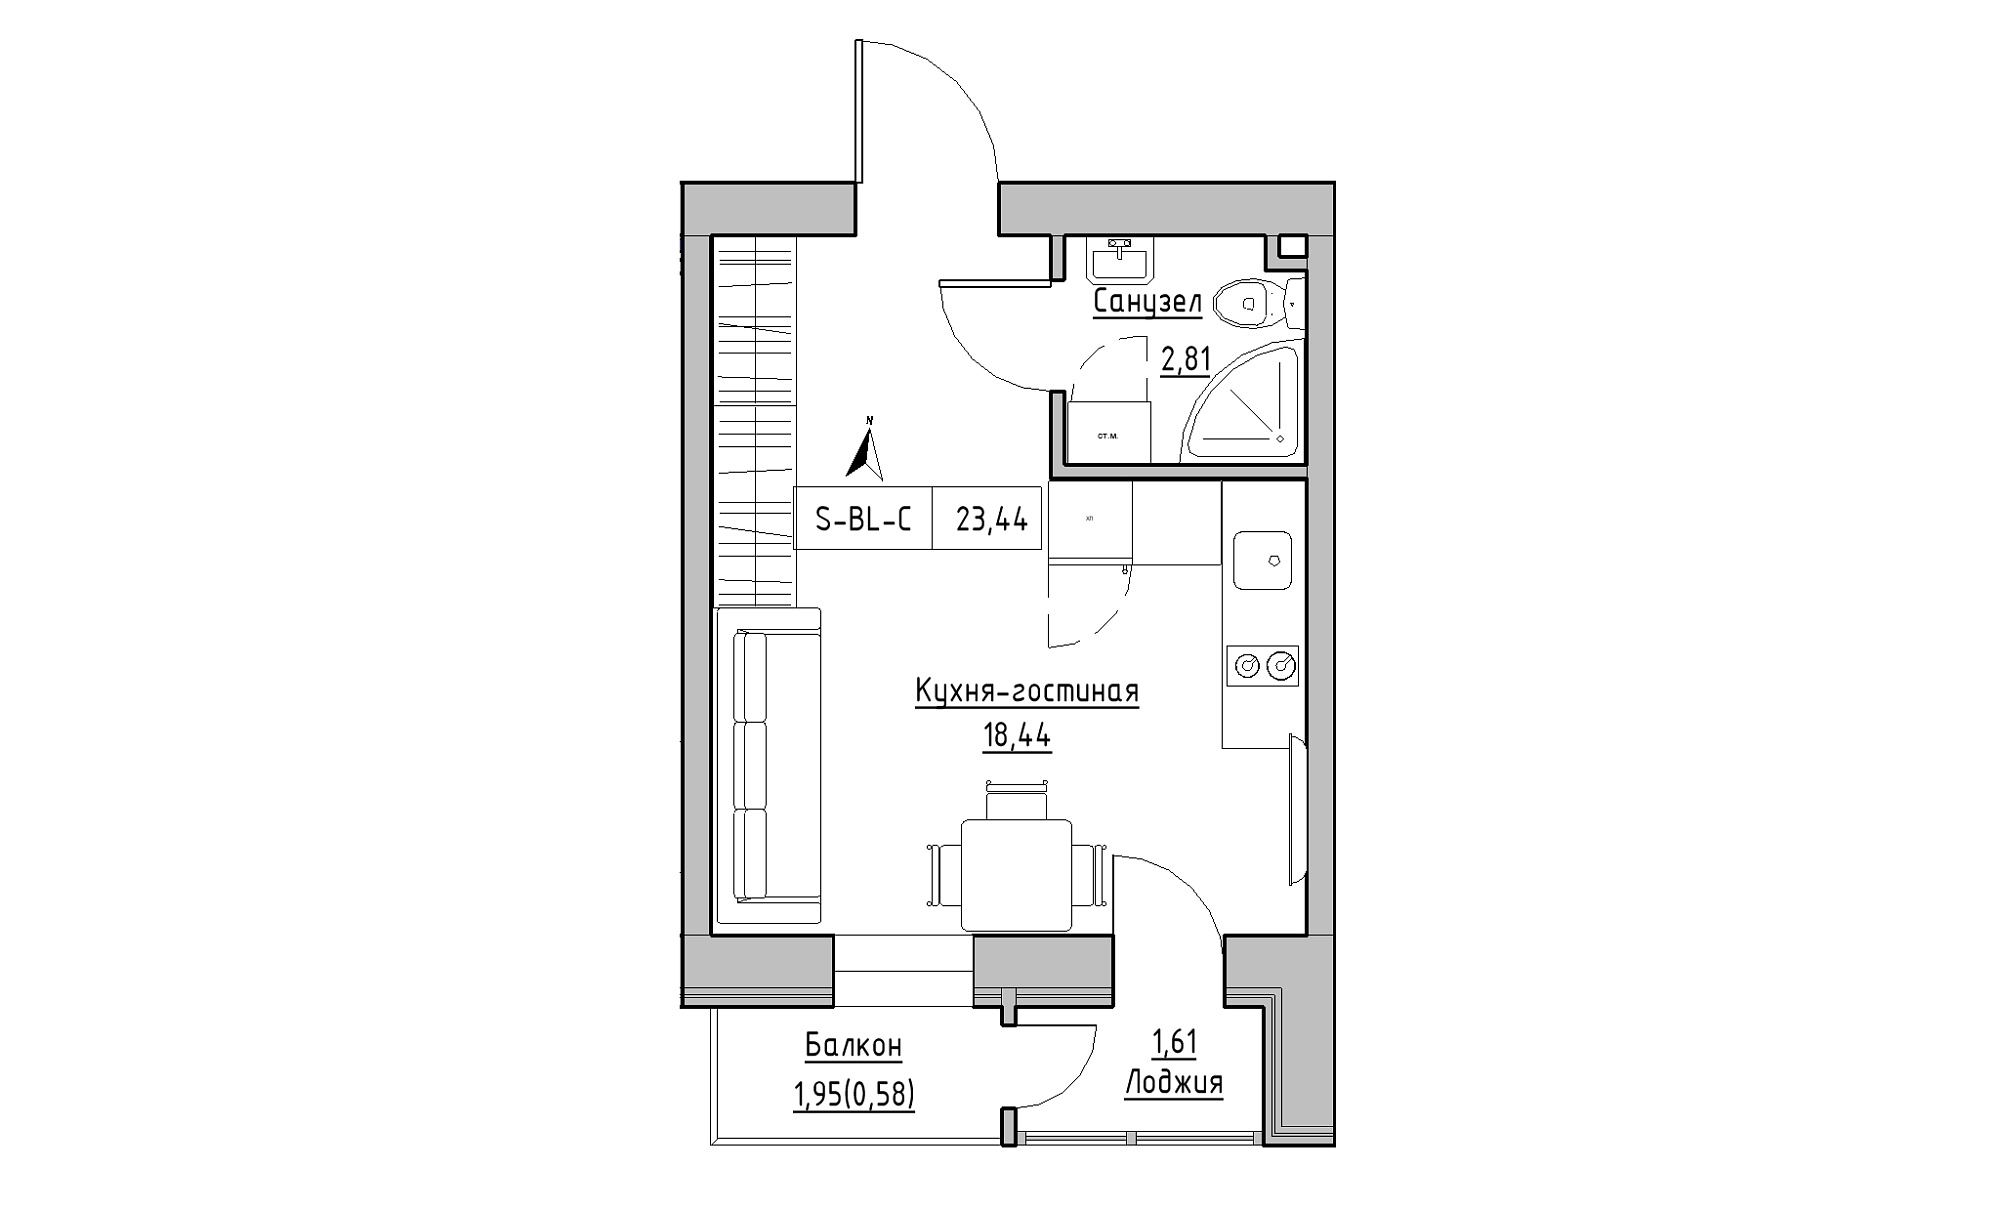 Planning Smart flats area 23.44m2, KS-023-02/0013.